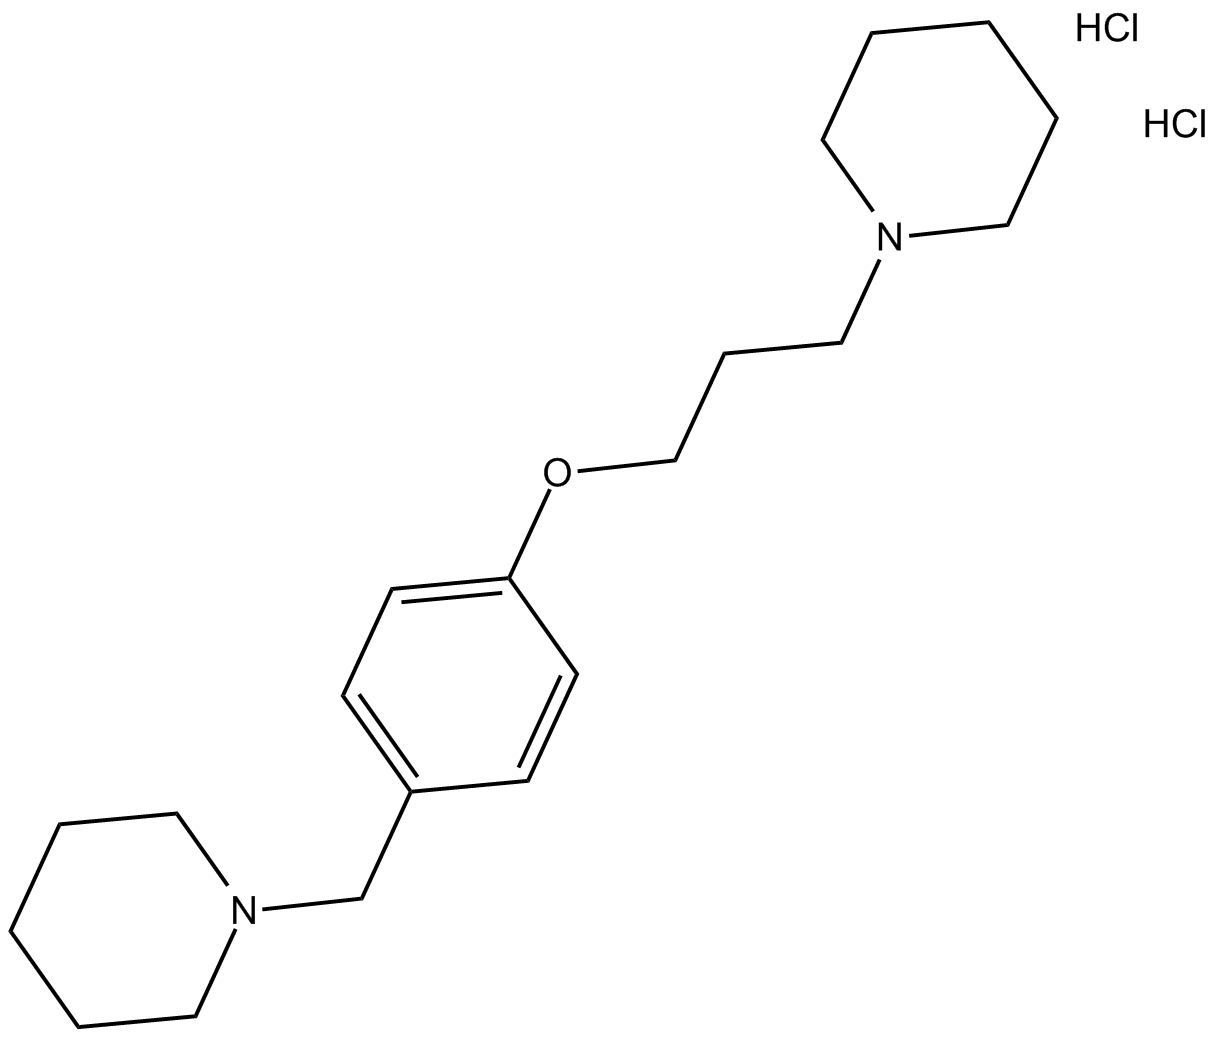 JNJ 5207852 dihydrochloride